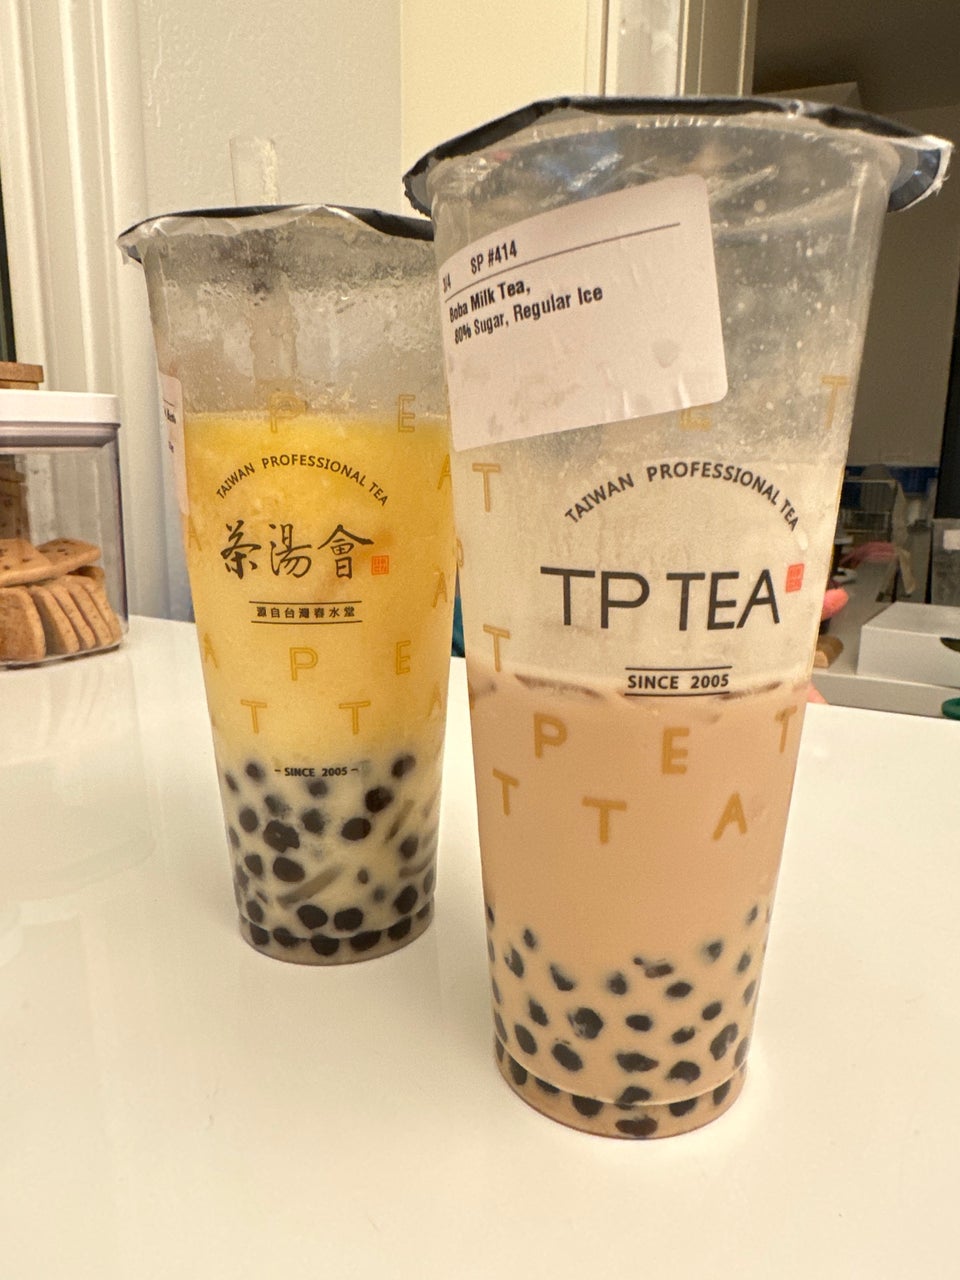 TP TEA Berkeley (Taiwan Professional Tea)